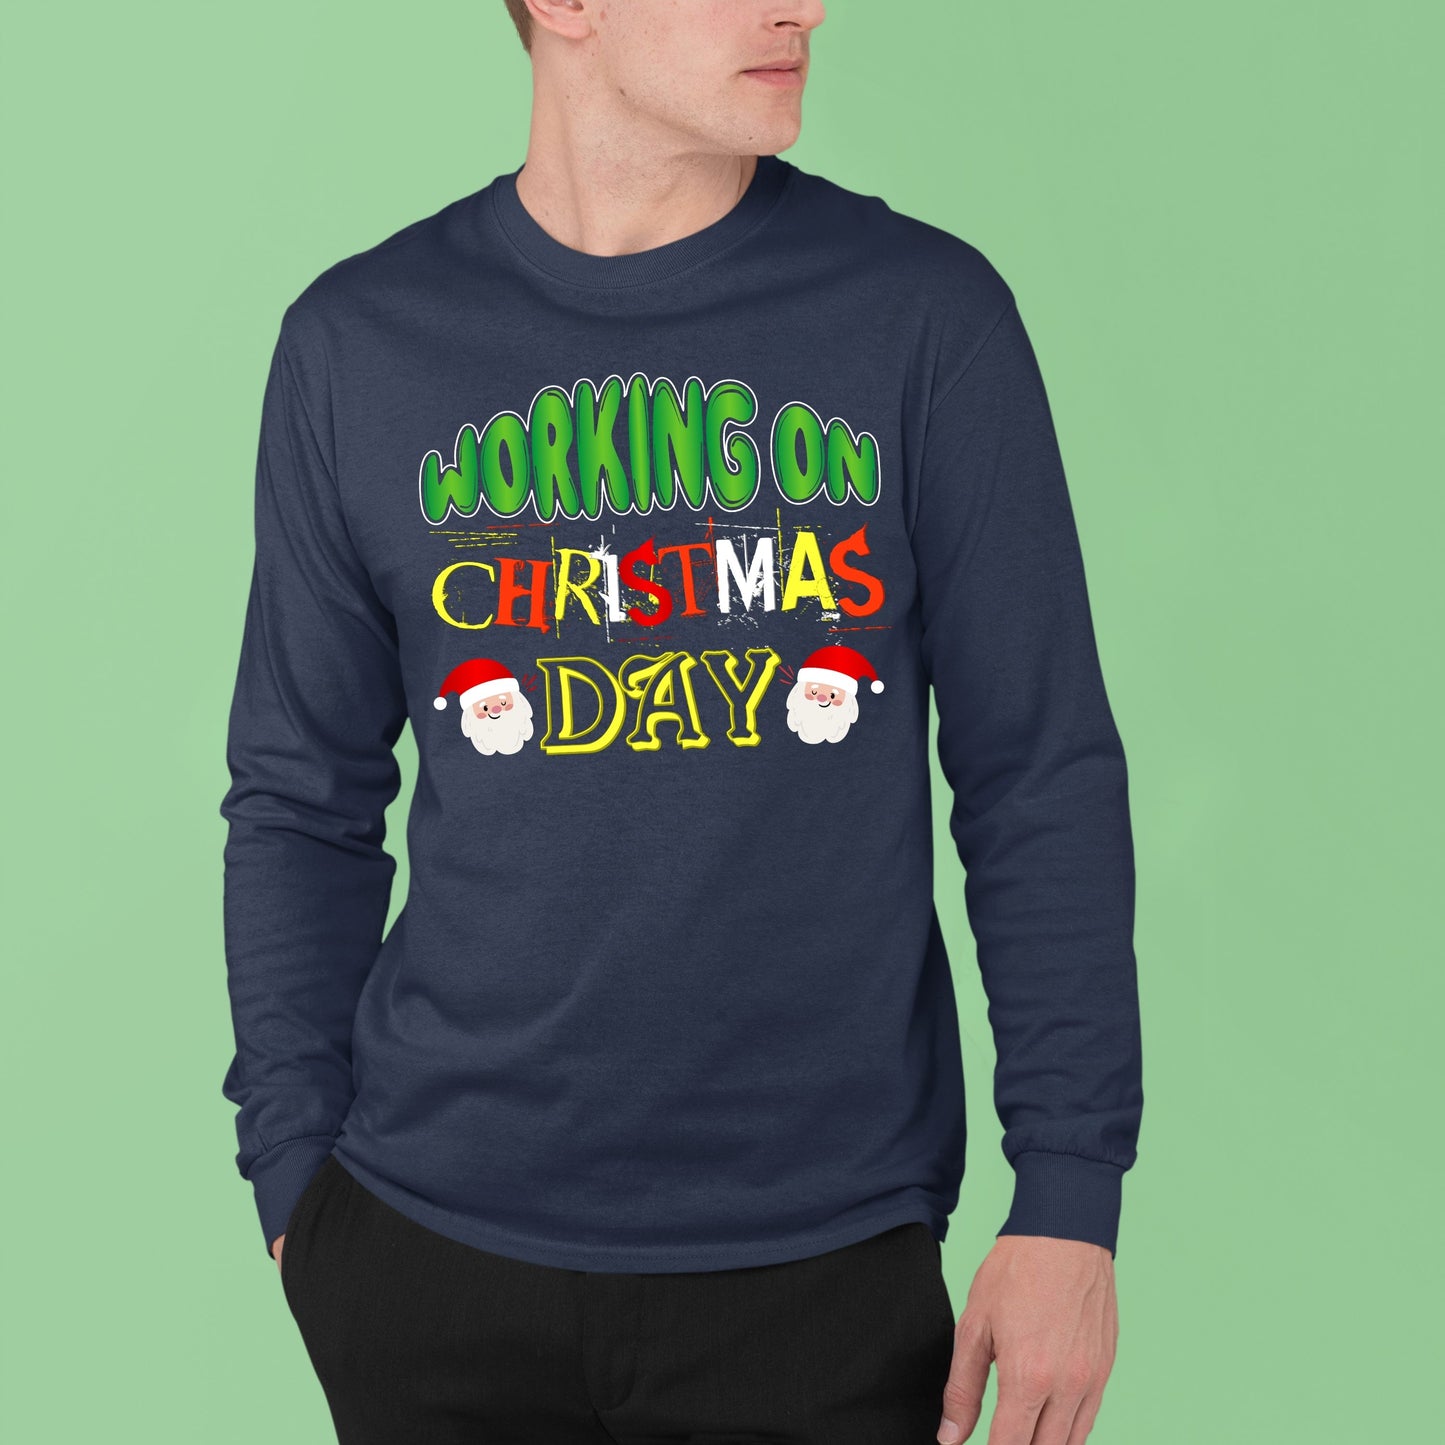 Working on Chirstmas day , Christmas Long Sleeves, Christmas Sweater, Christmas Crewneck For Men, Christmas Present, Christmas Sweatshirt